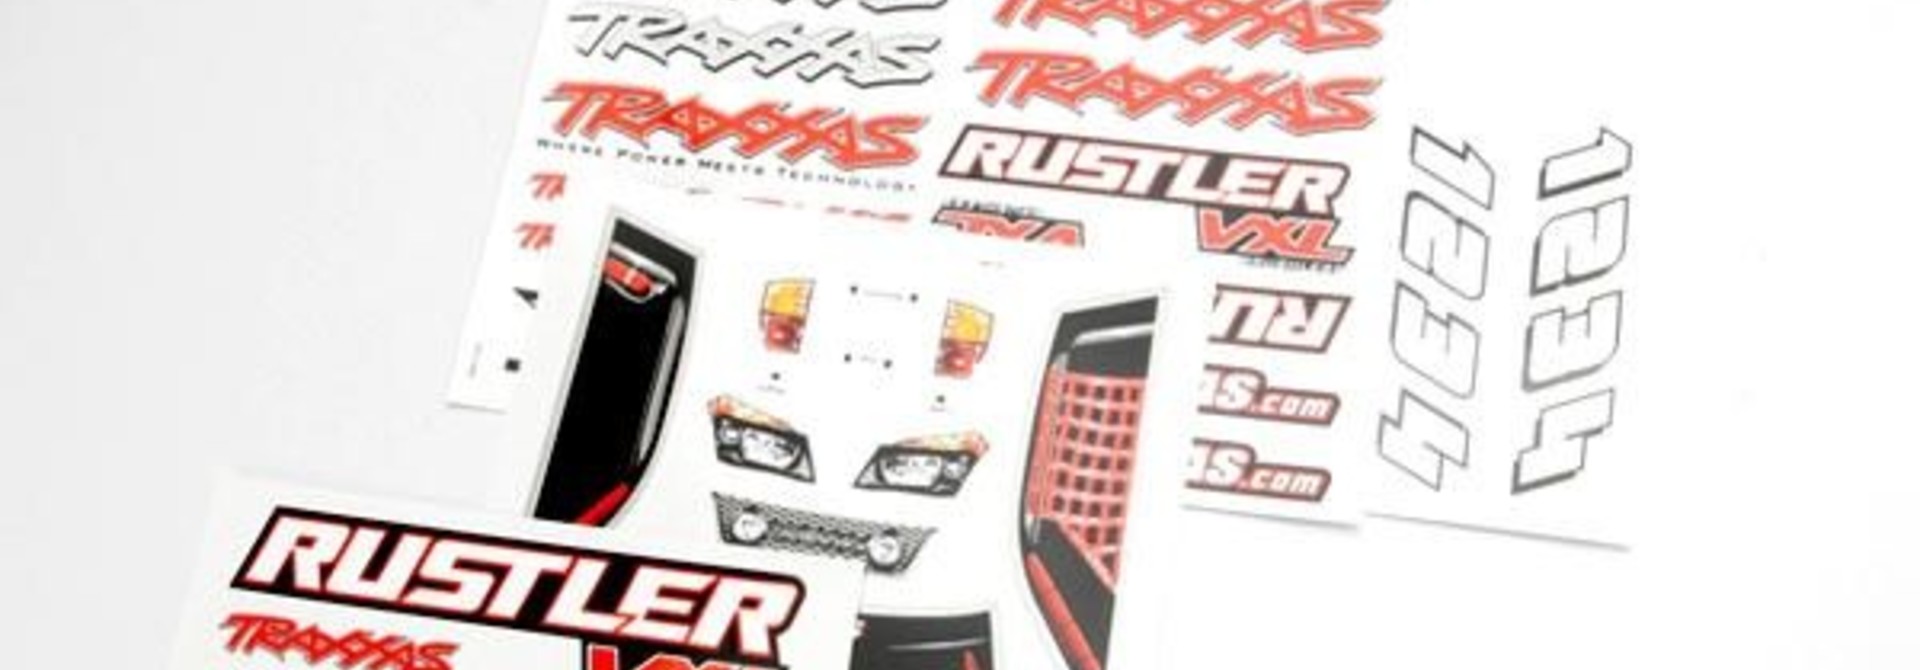 Decal sheets, Rustler VXL, TRX3713R